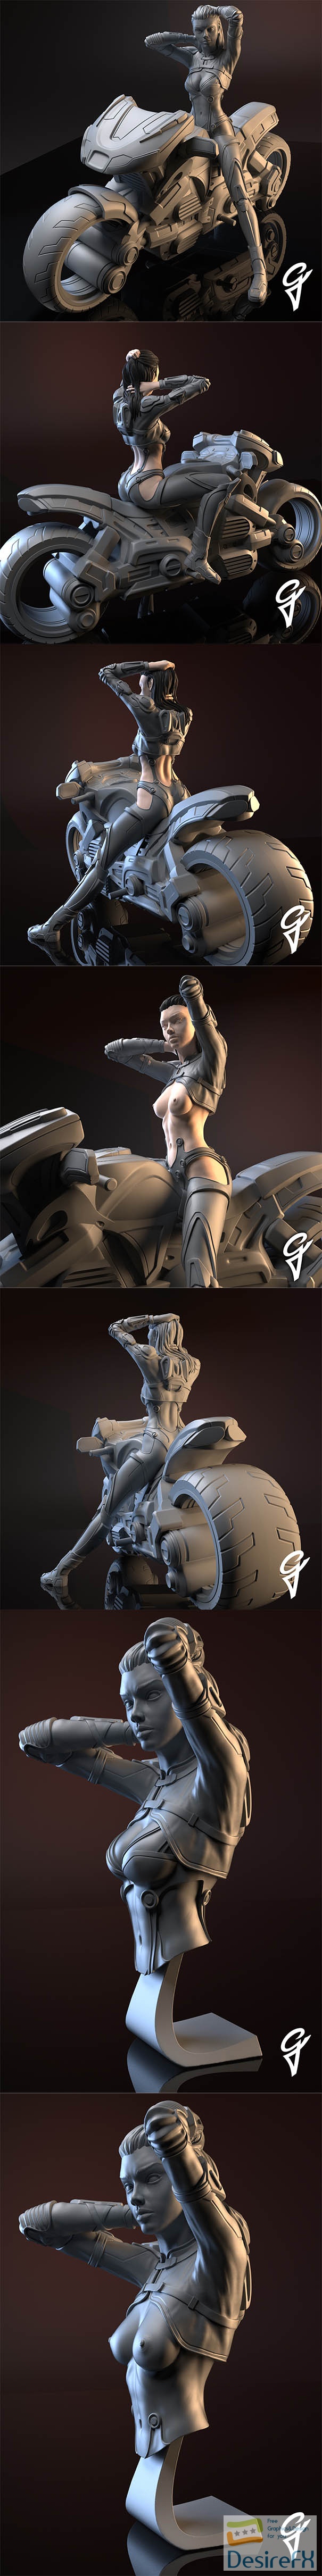 Tamsin the rider – Gsculpt Art – 3D Print